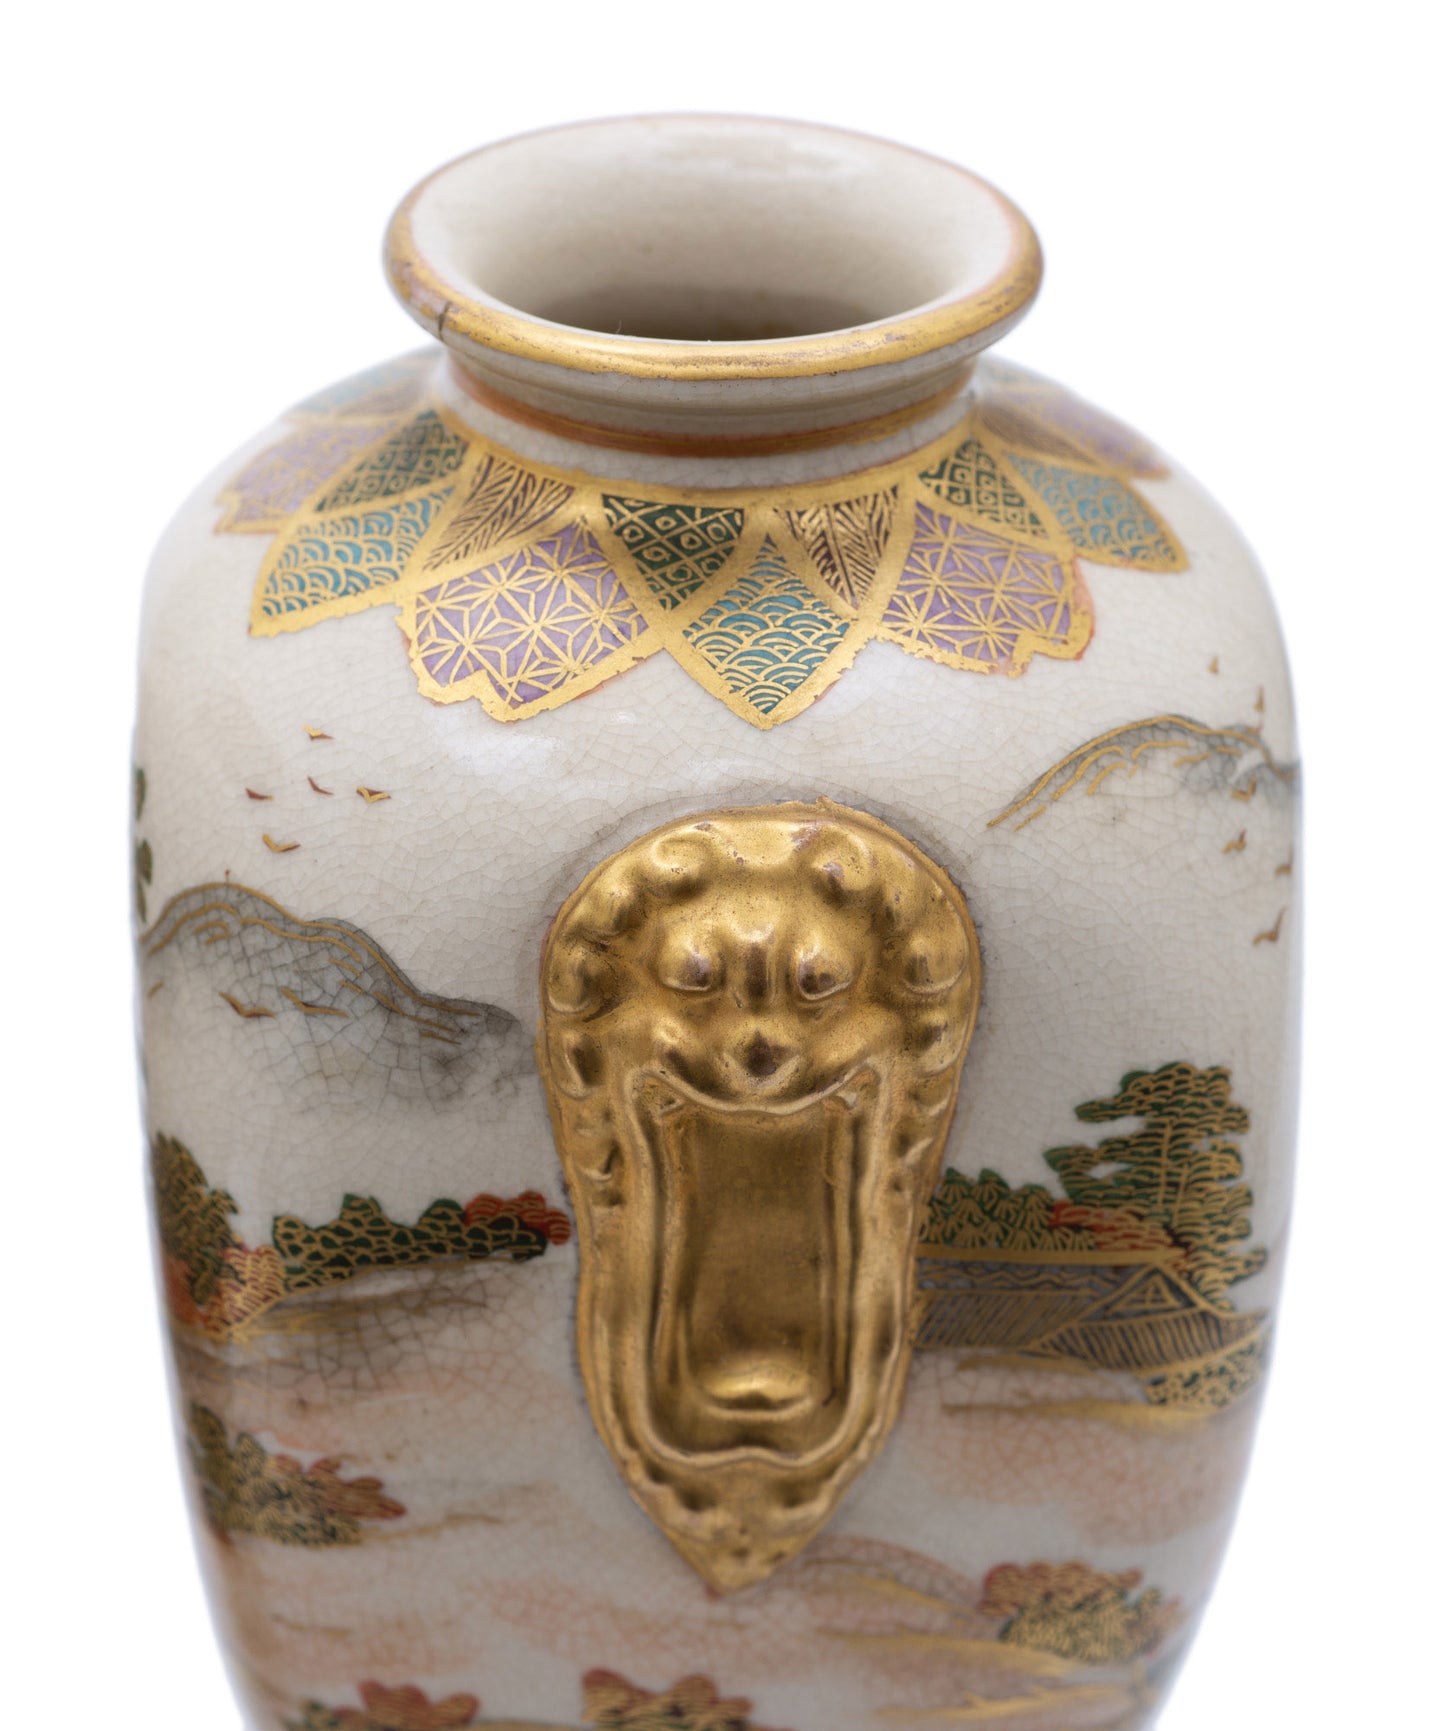 Pair Antique Satsuma Ware Pottery Vases by Hakusan - Japanese Meiji c1880 (Code 2473)